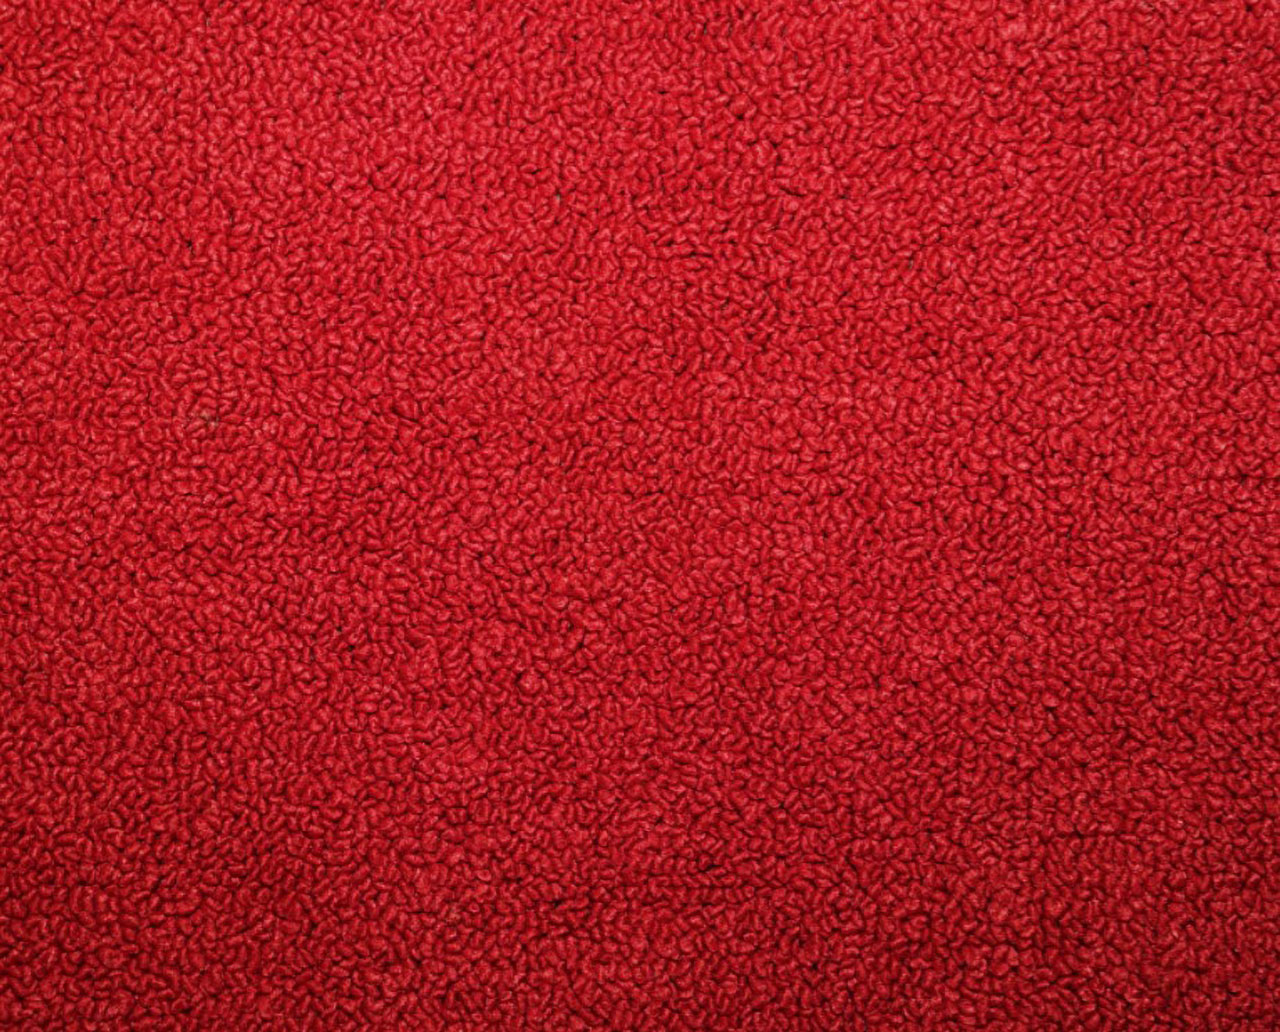 Holden Standard HD Standard Panel Van E24 Mephisto Red Carpet (Image 1 of 1)